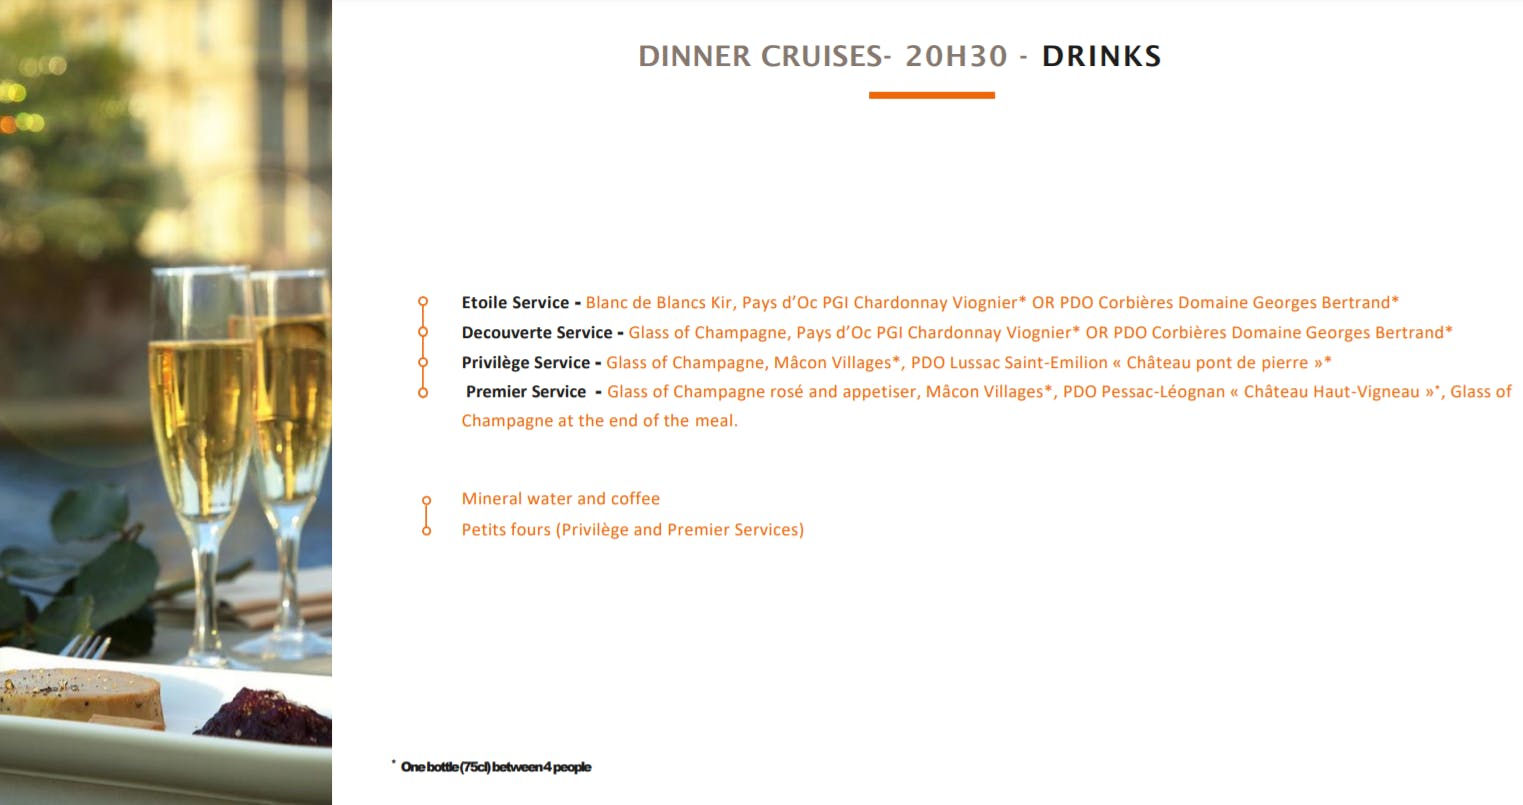 bateaux parisisens dinner cruise drinks.PNG